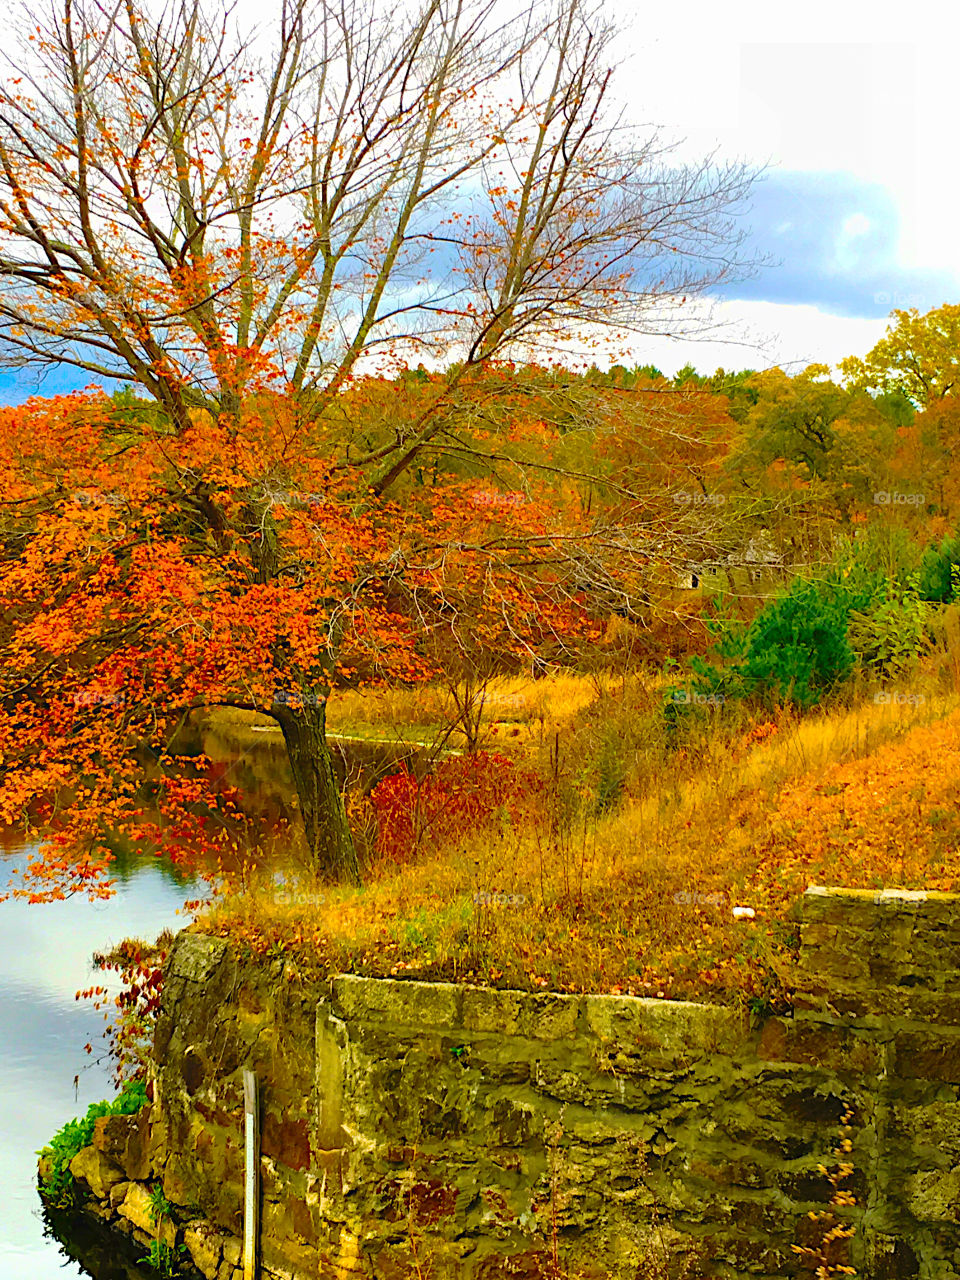 Autumn trees near the lake